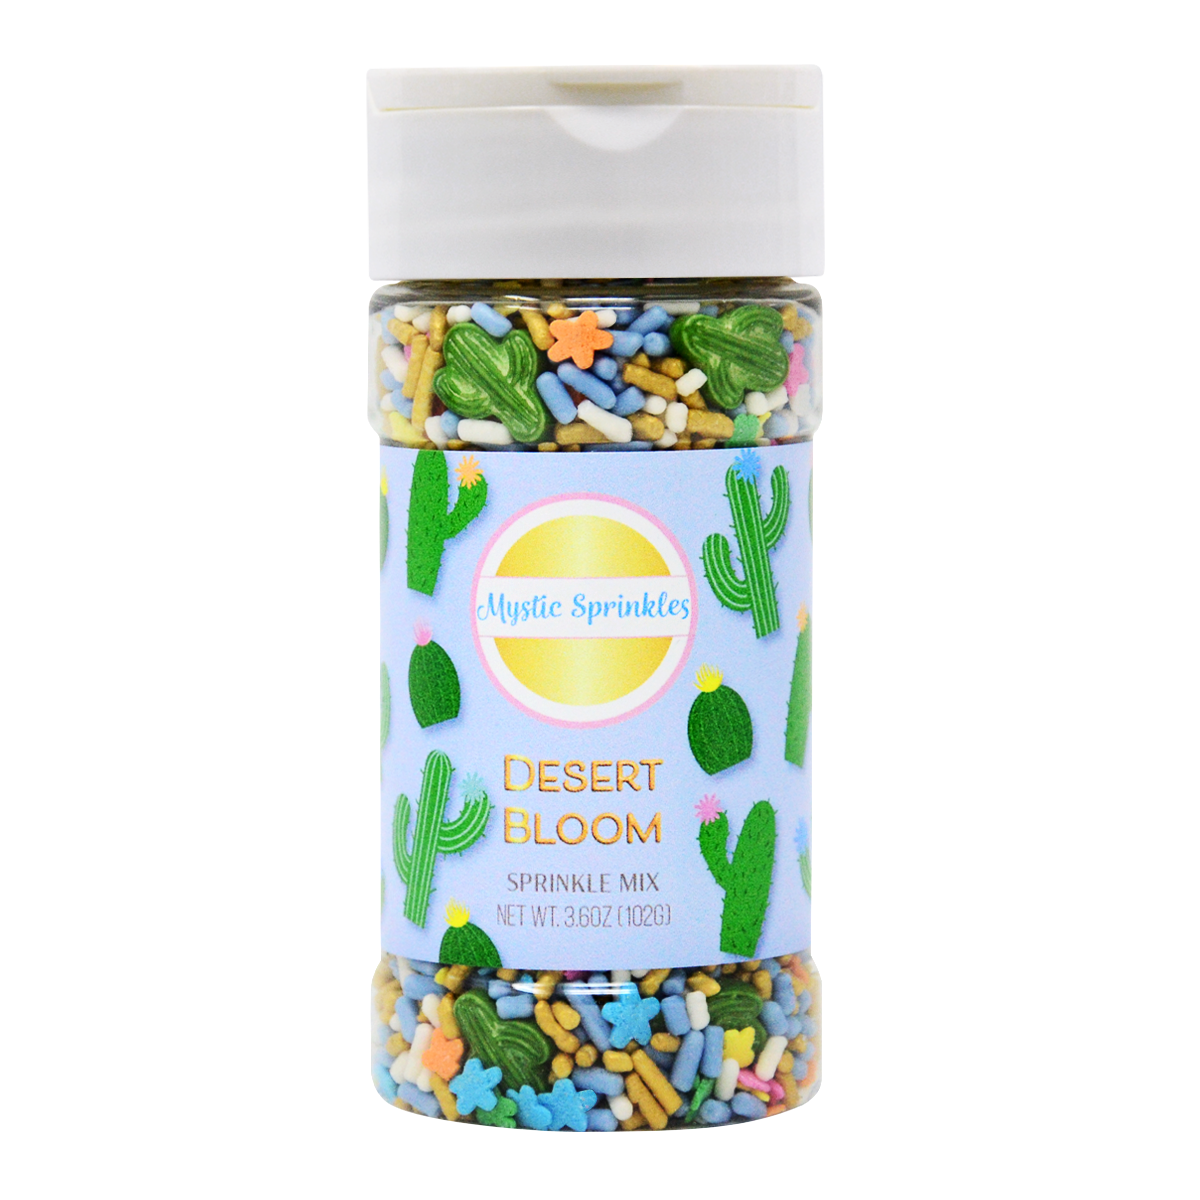 Desert Bloom Sprinkle Mix 3.6oz